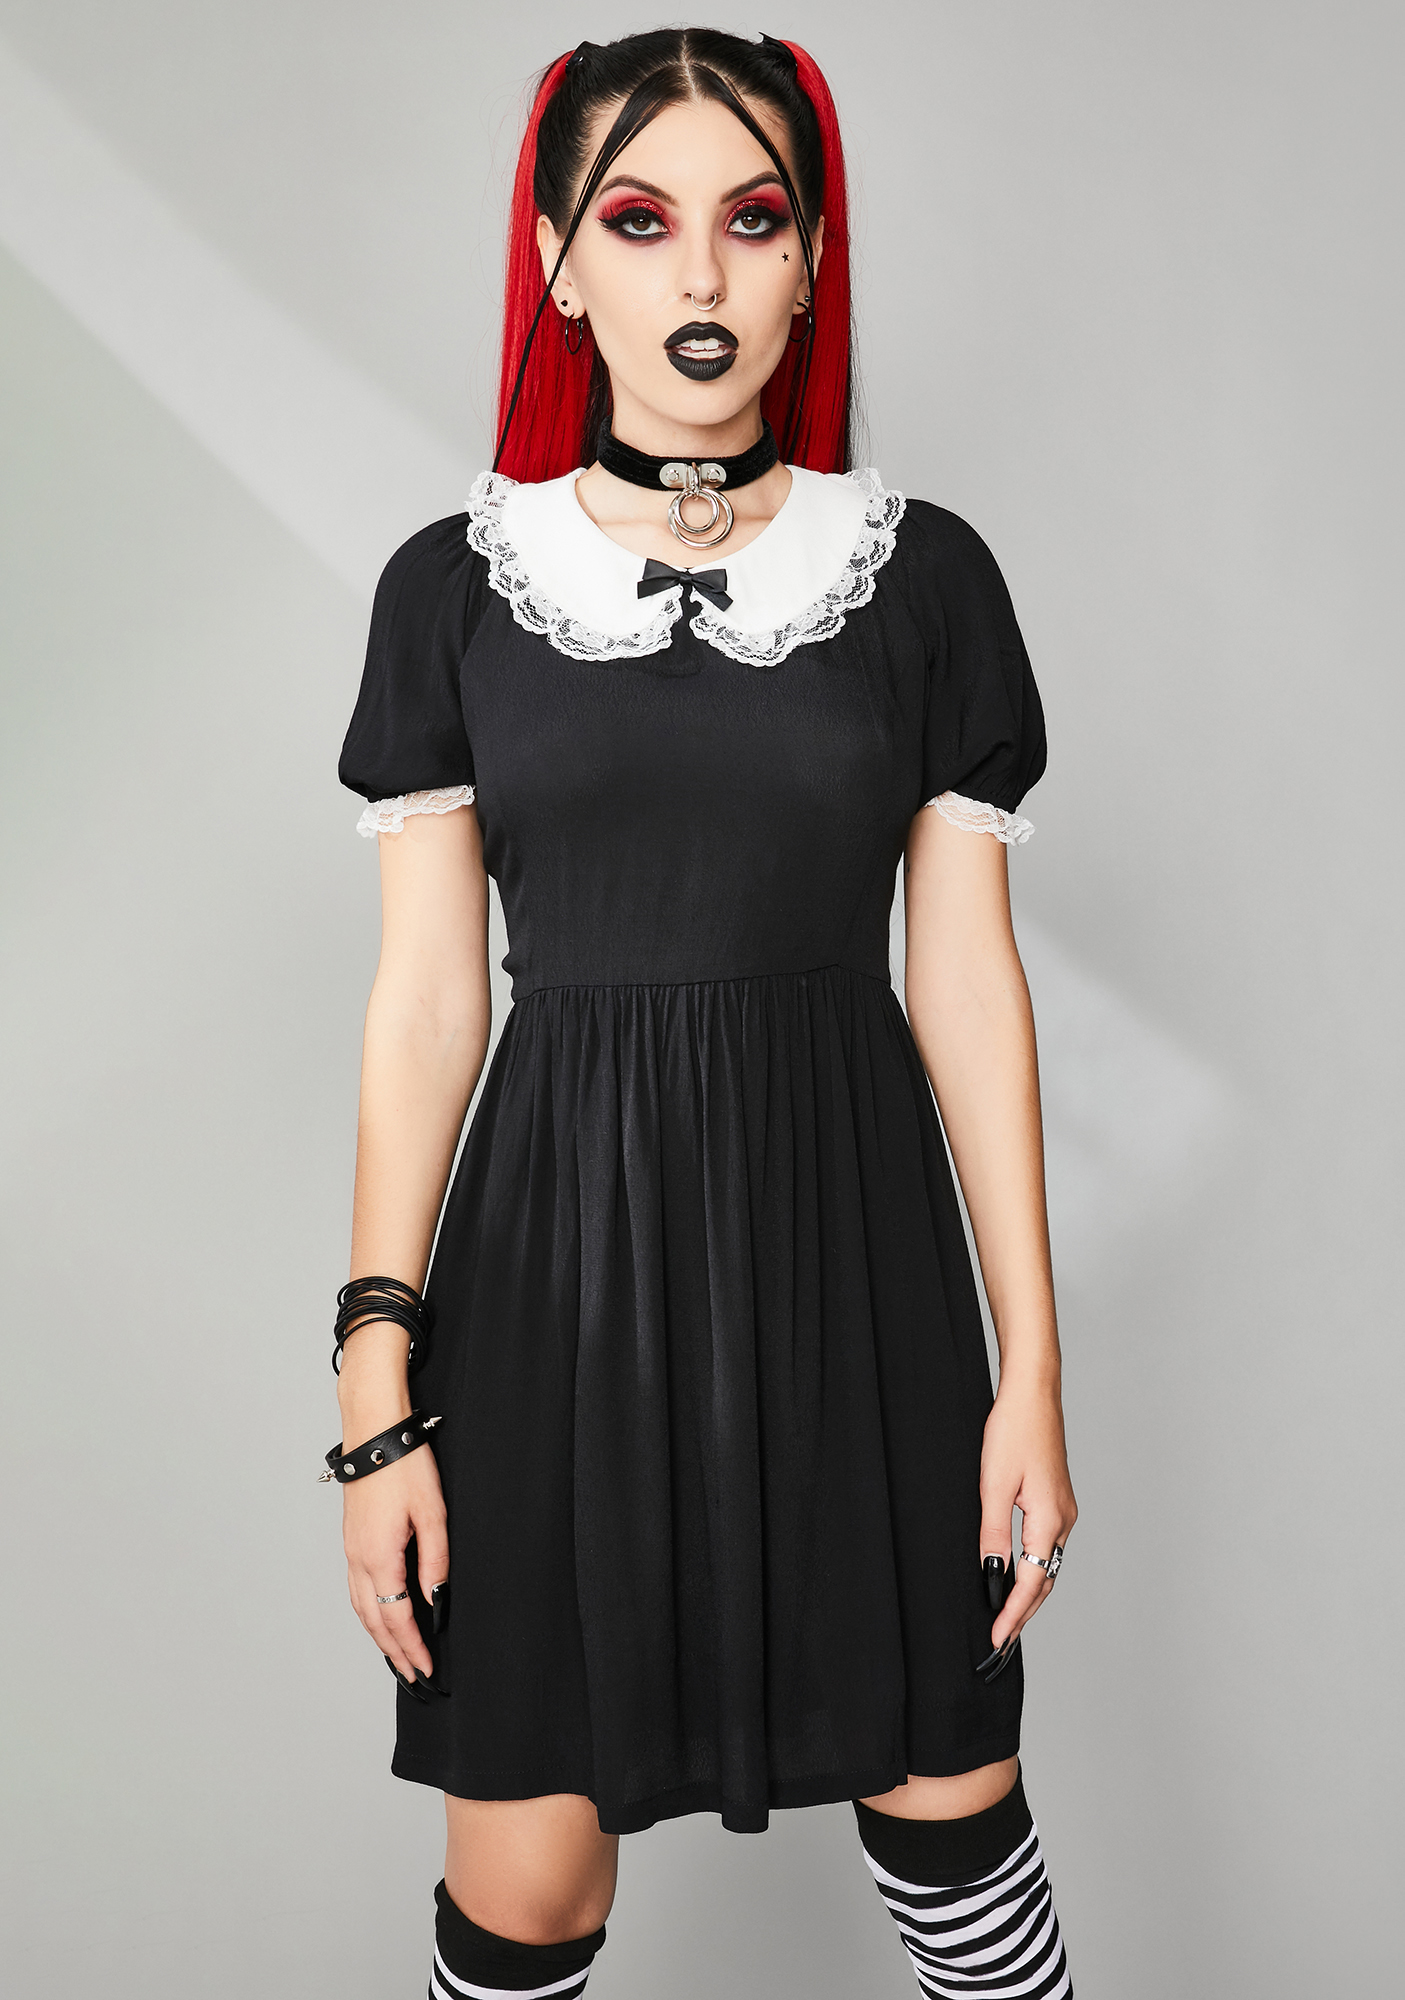 Widow Babydoll Lace Trim Gothic Lolita Dress - Black | Dolls Kill